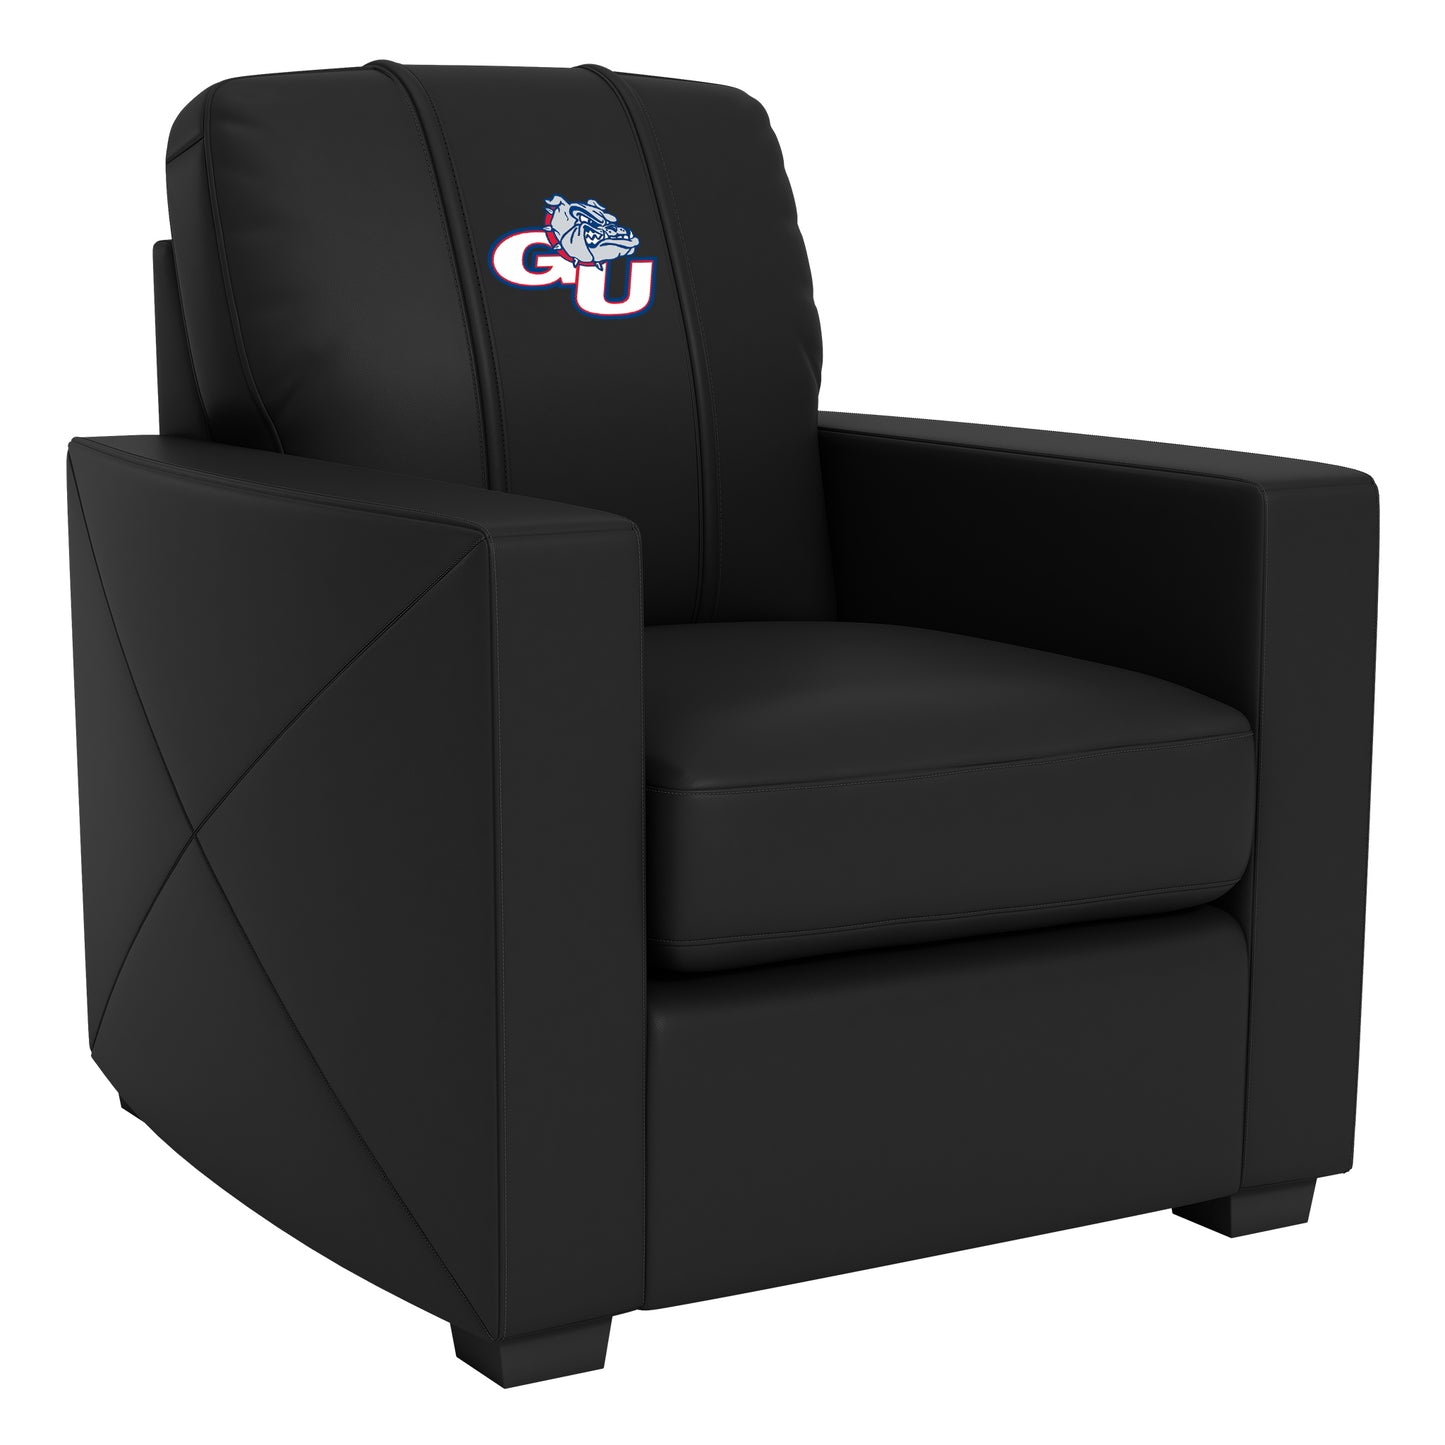 Silver Club Chair with Gonzaga Bulldogs Logo